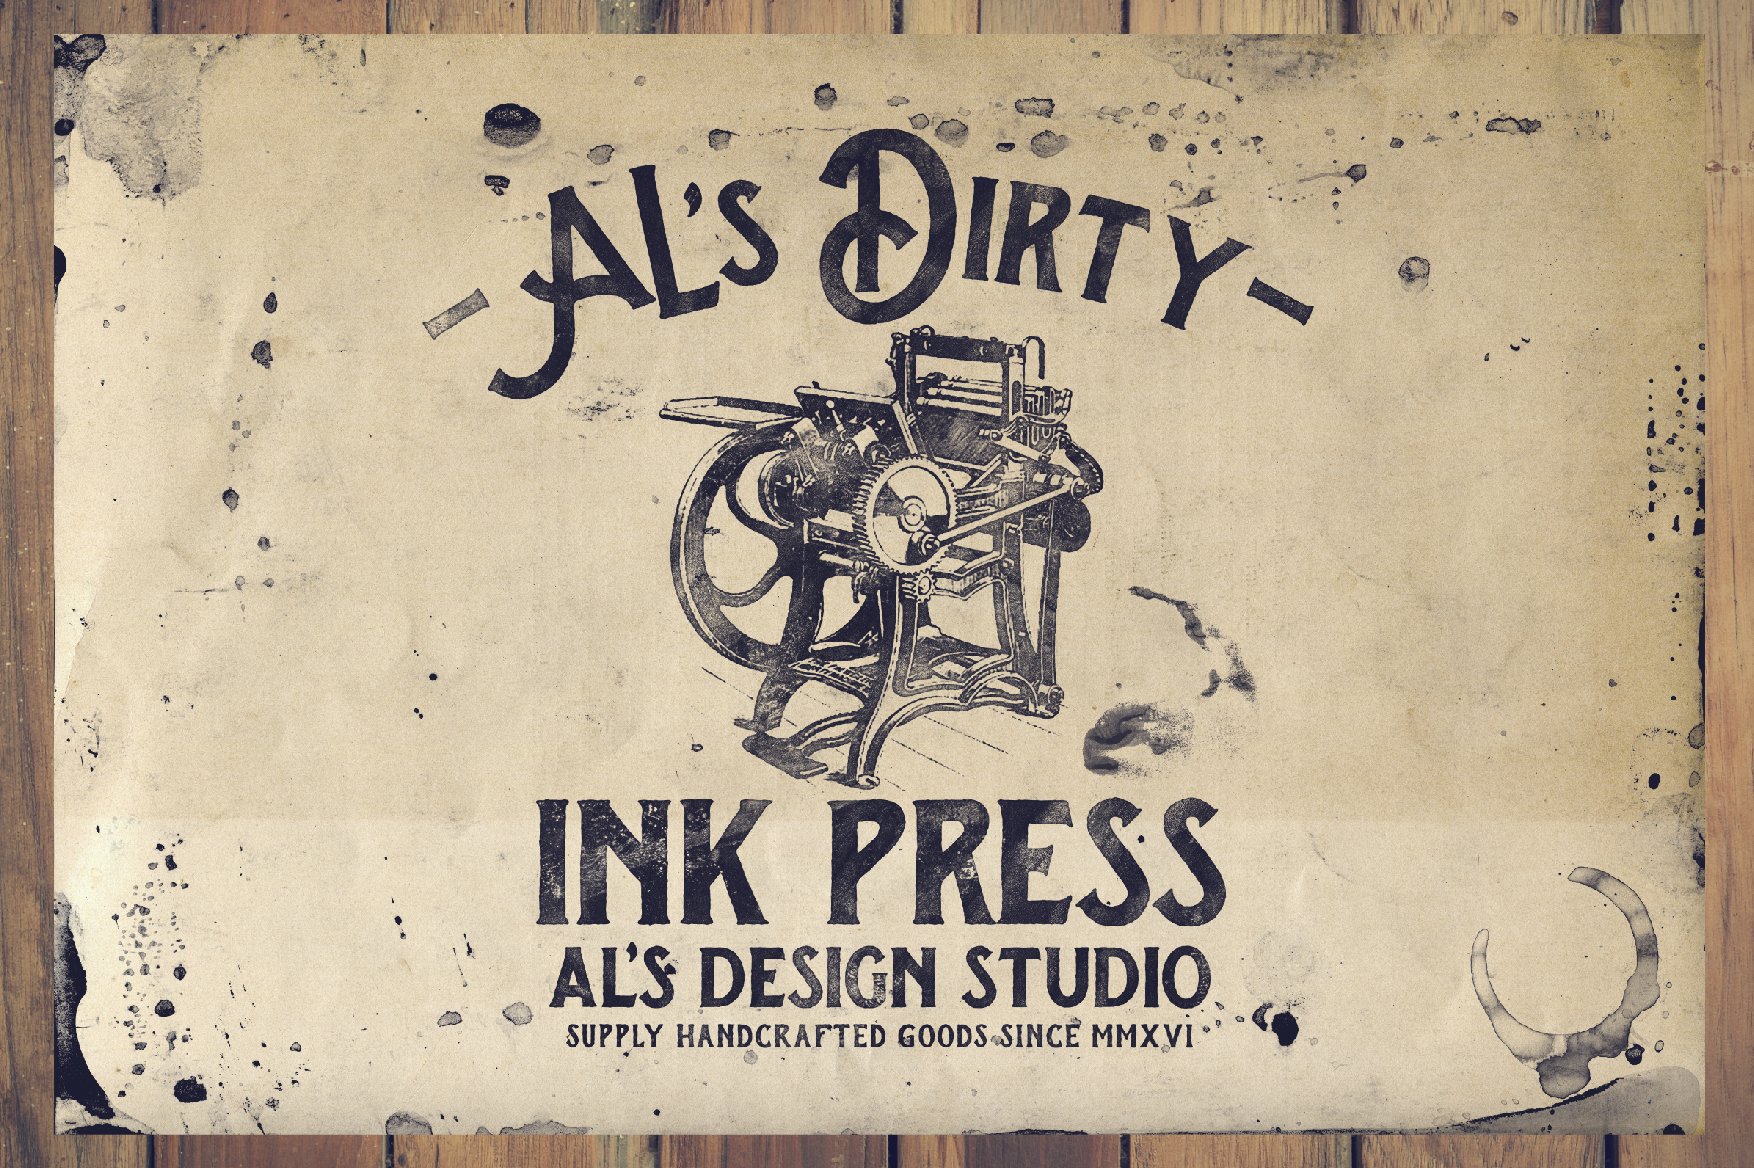 AL's Dirty Ink Presscover image.